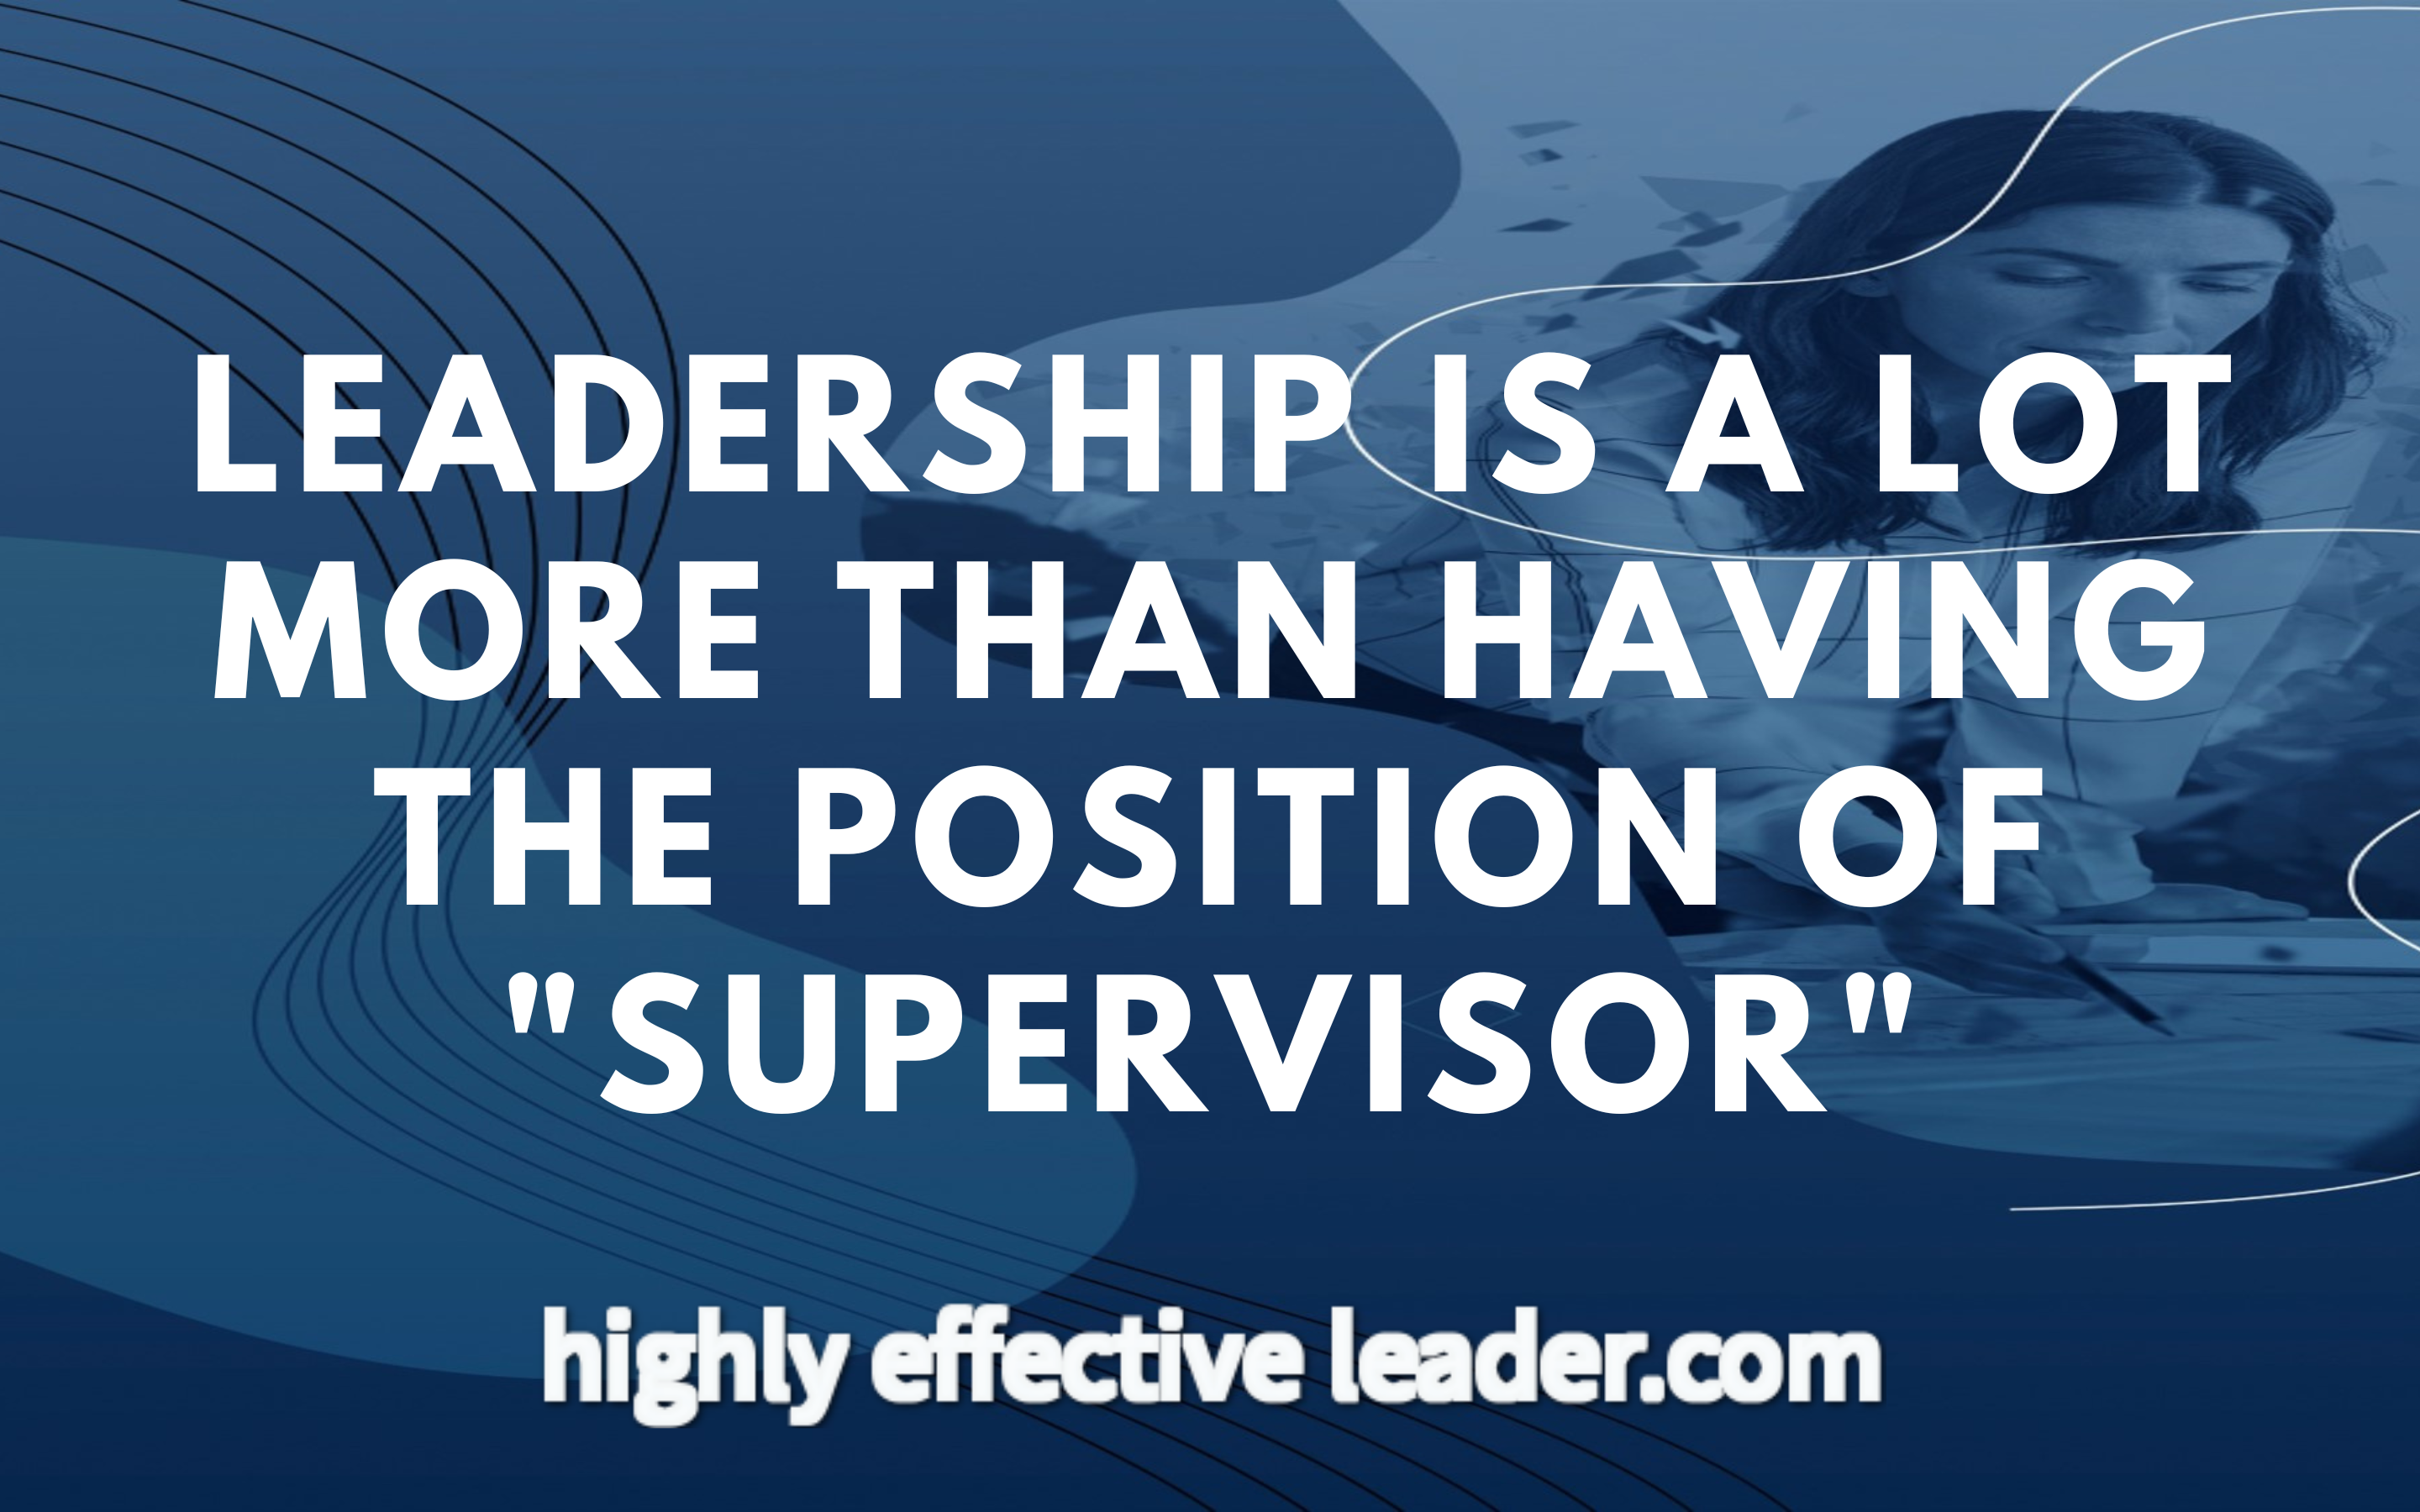 How Do You Define Leadership?